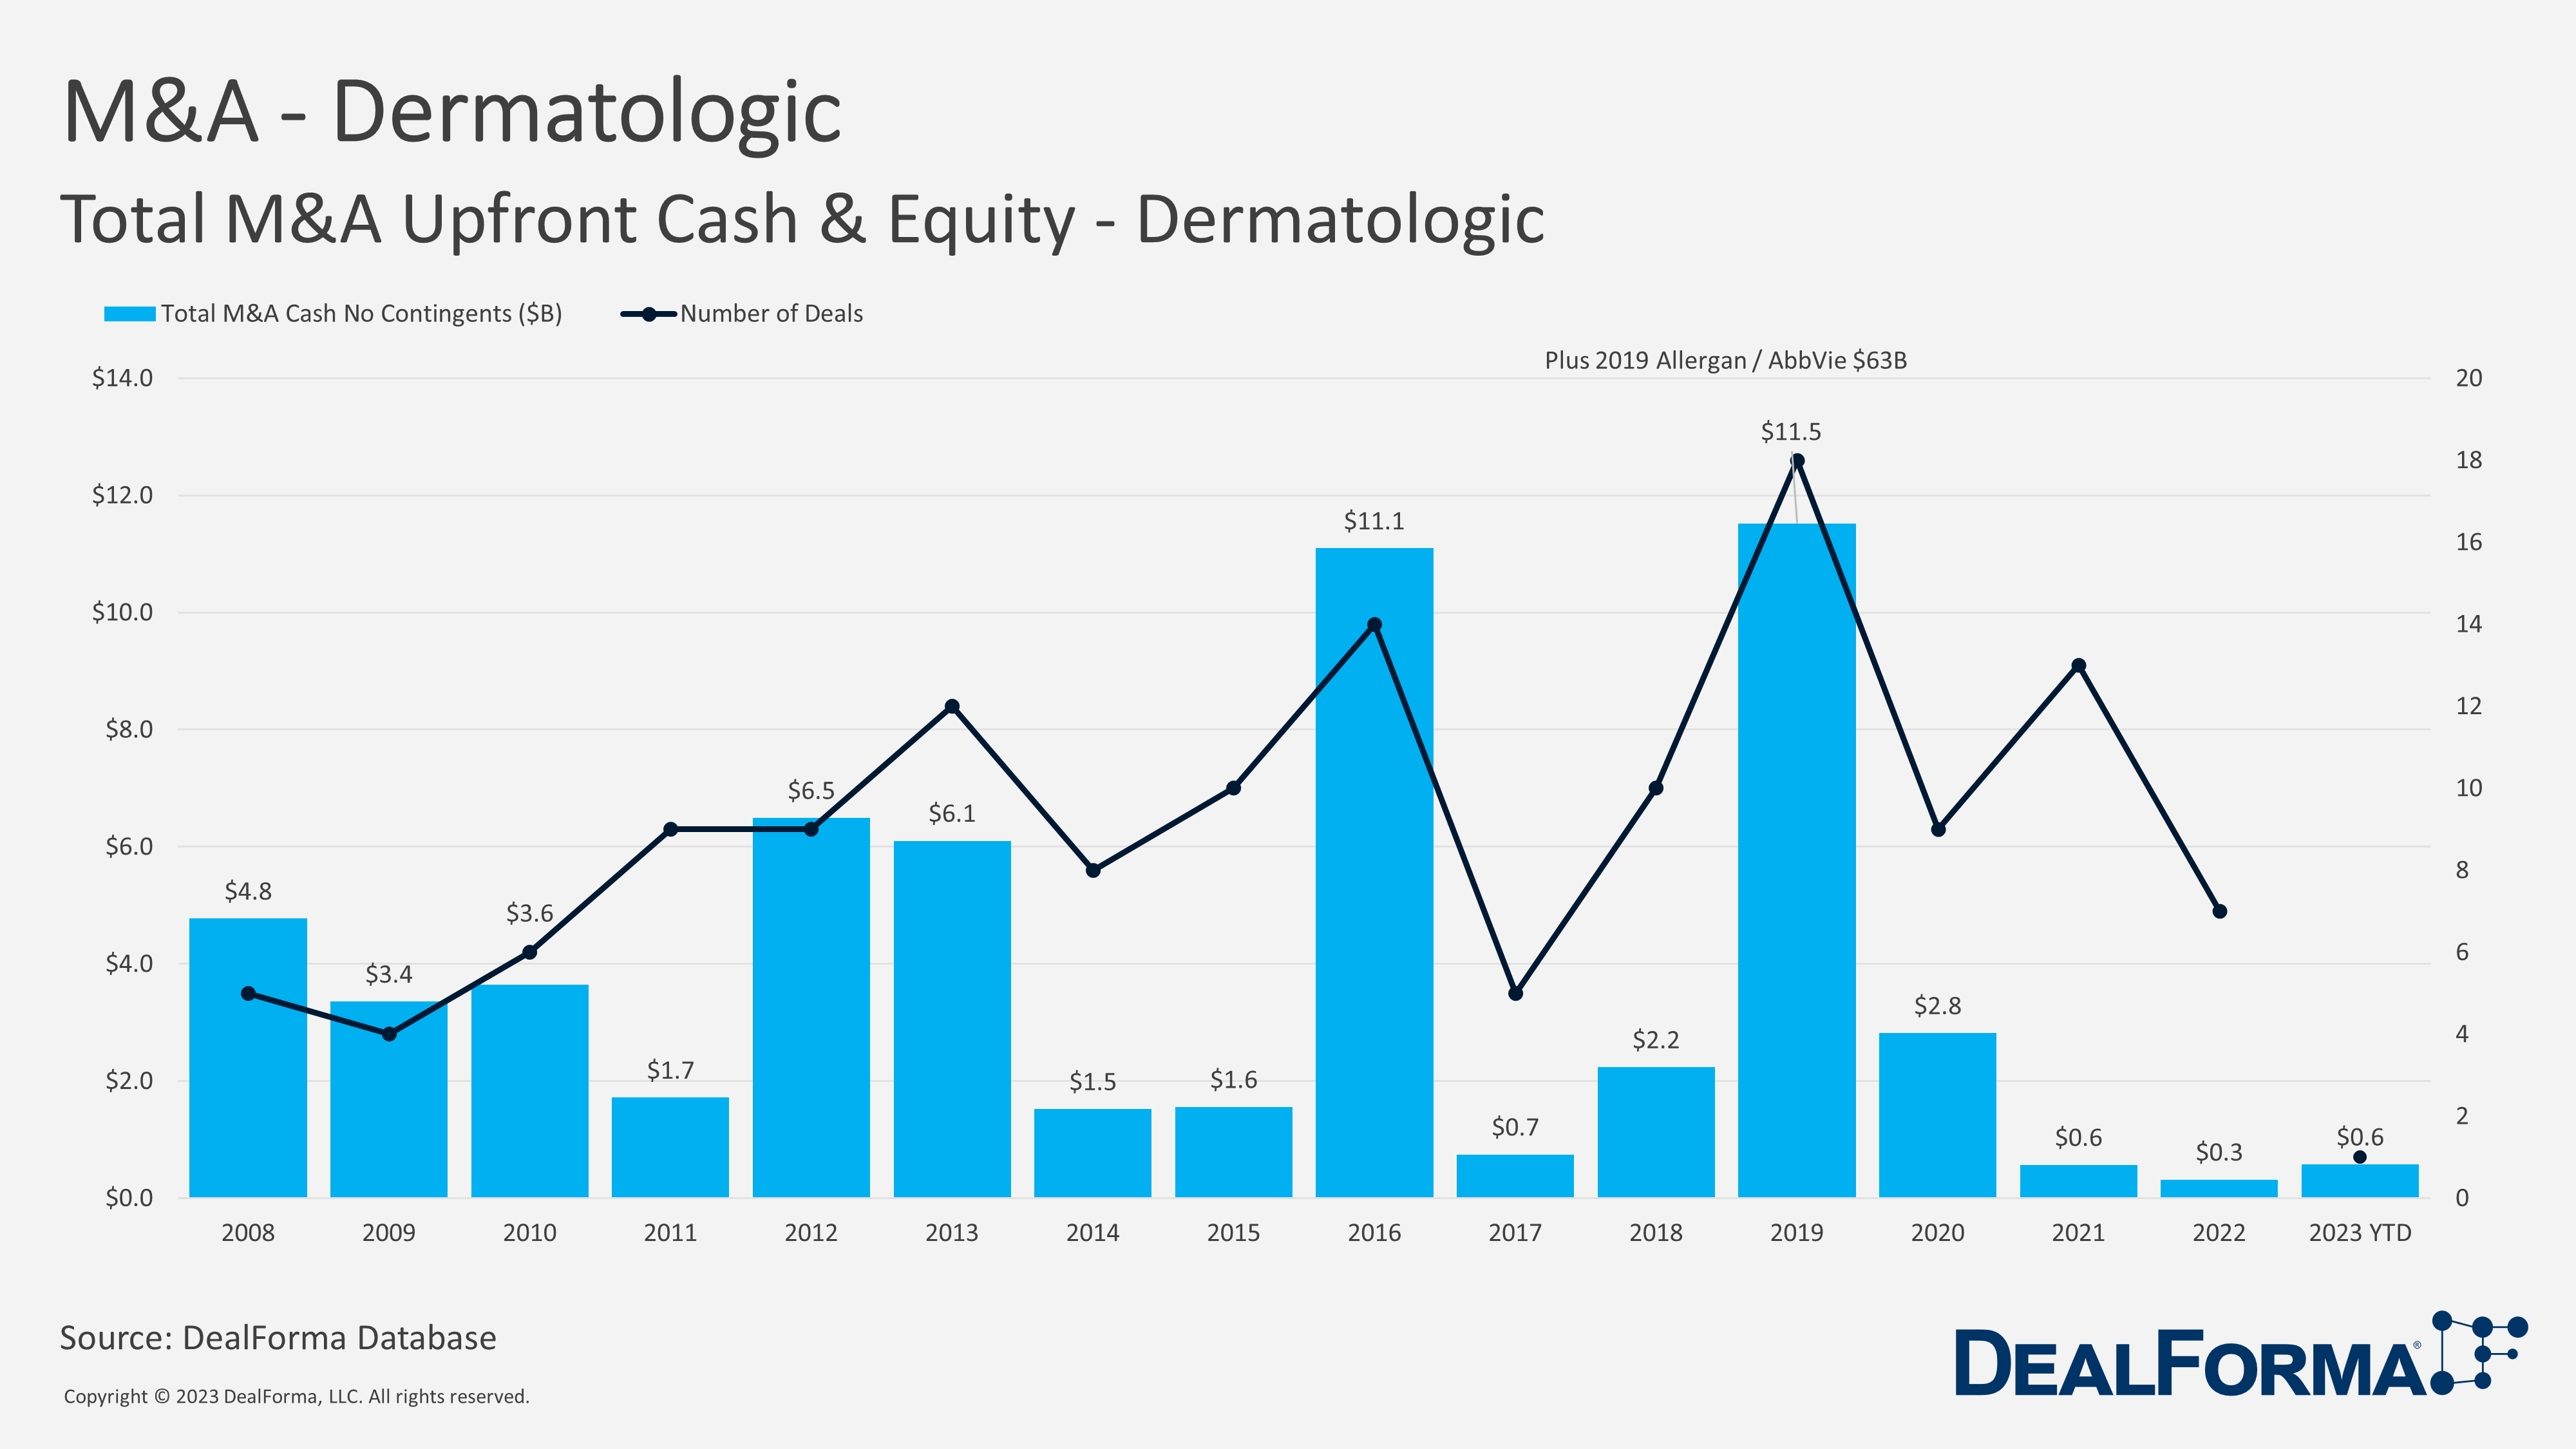 M&A Dermatologic. Total M&A Upfront Cash & Equity - Dermatologic